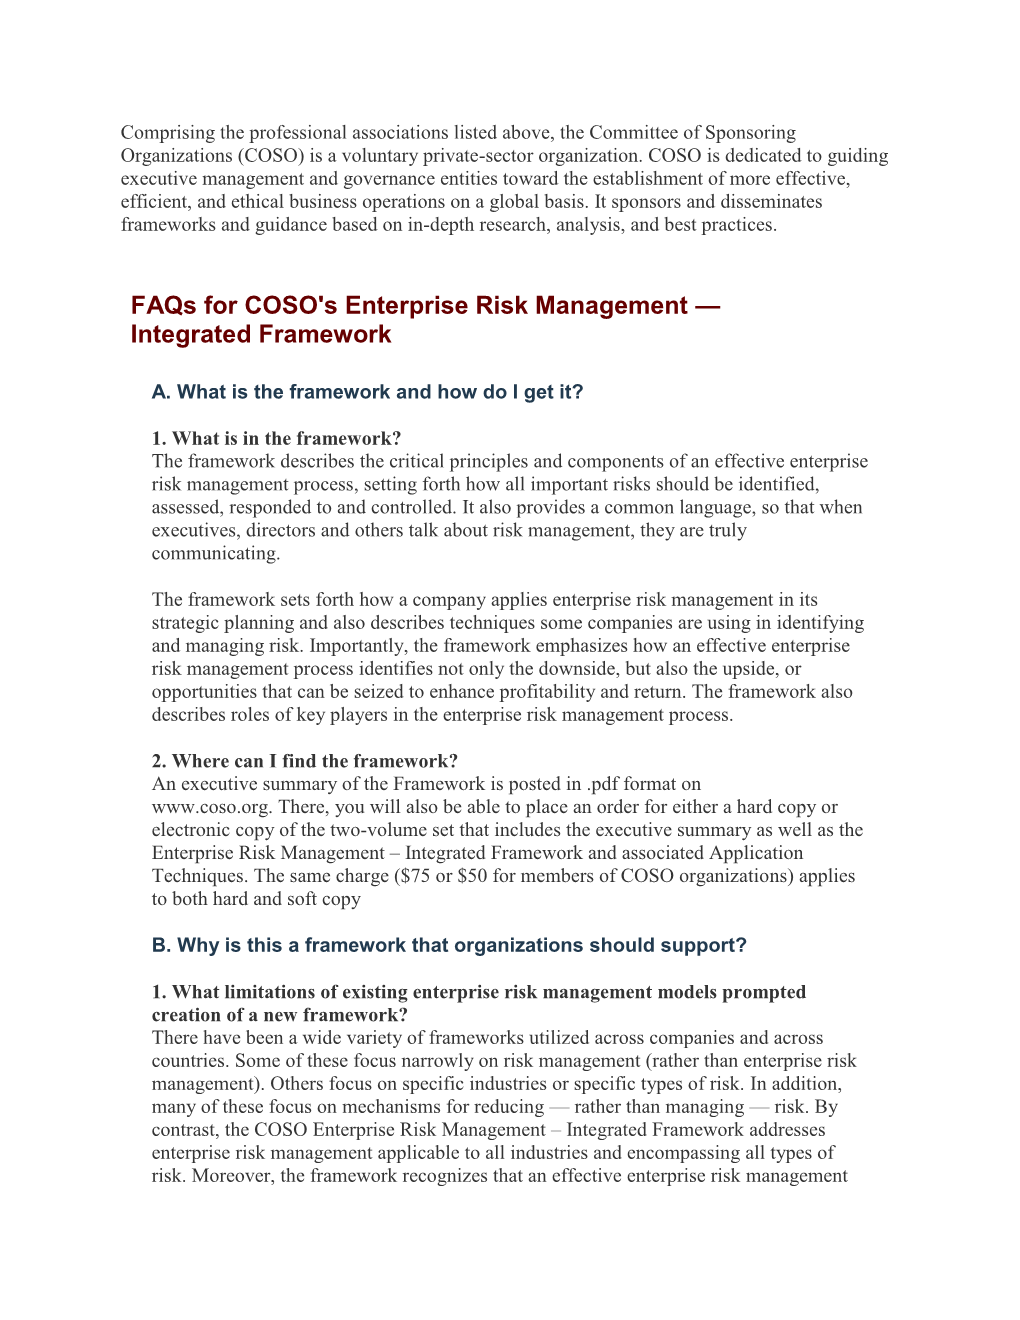 Faqs for COSO's Enterprise Risk Management — Integrated Framework